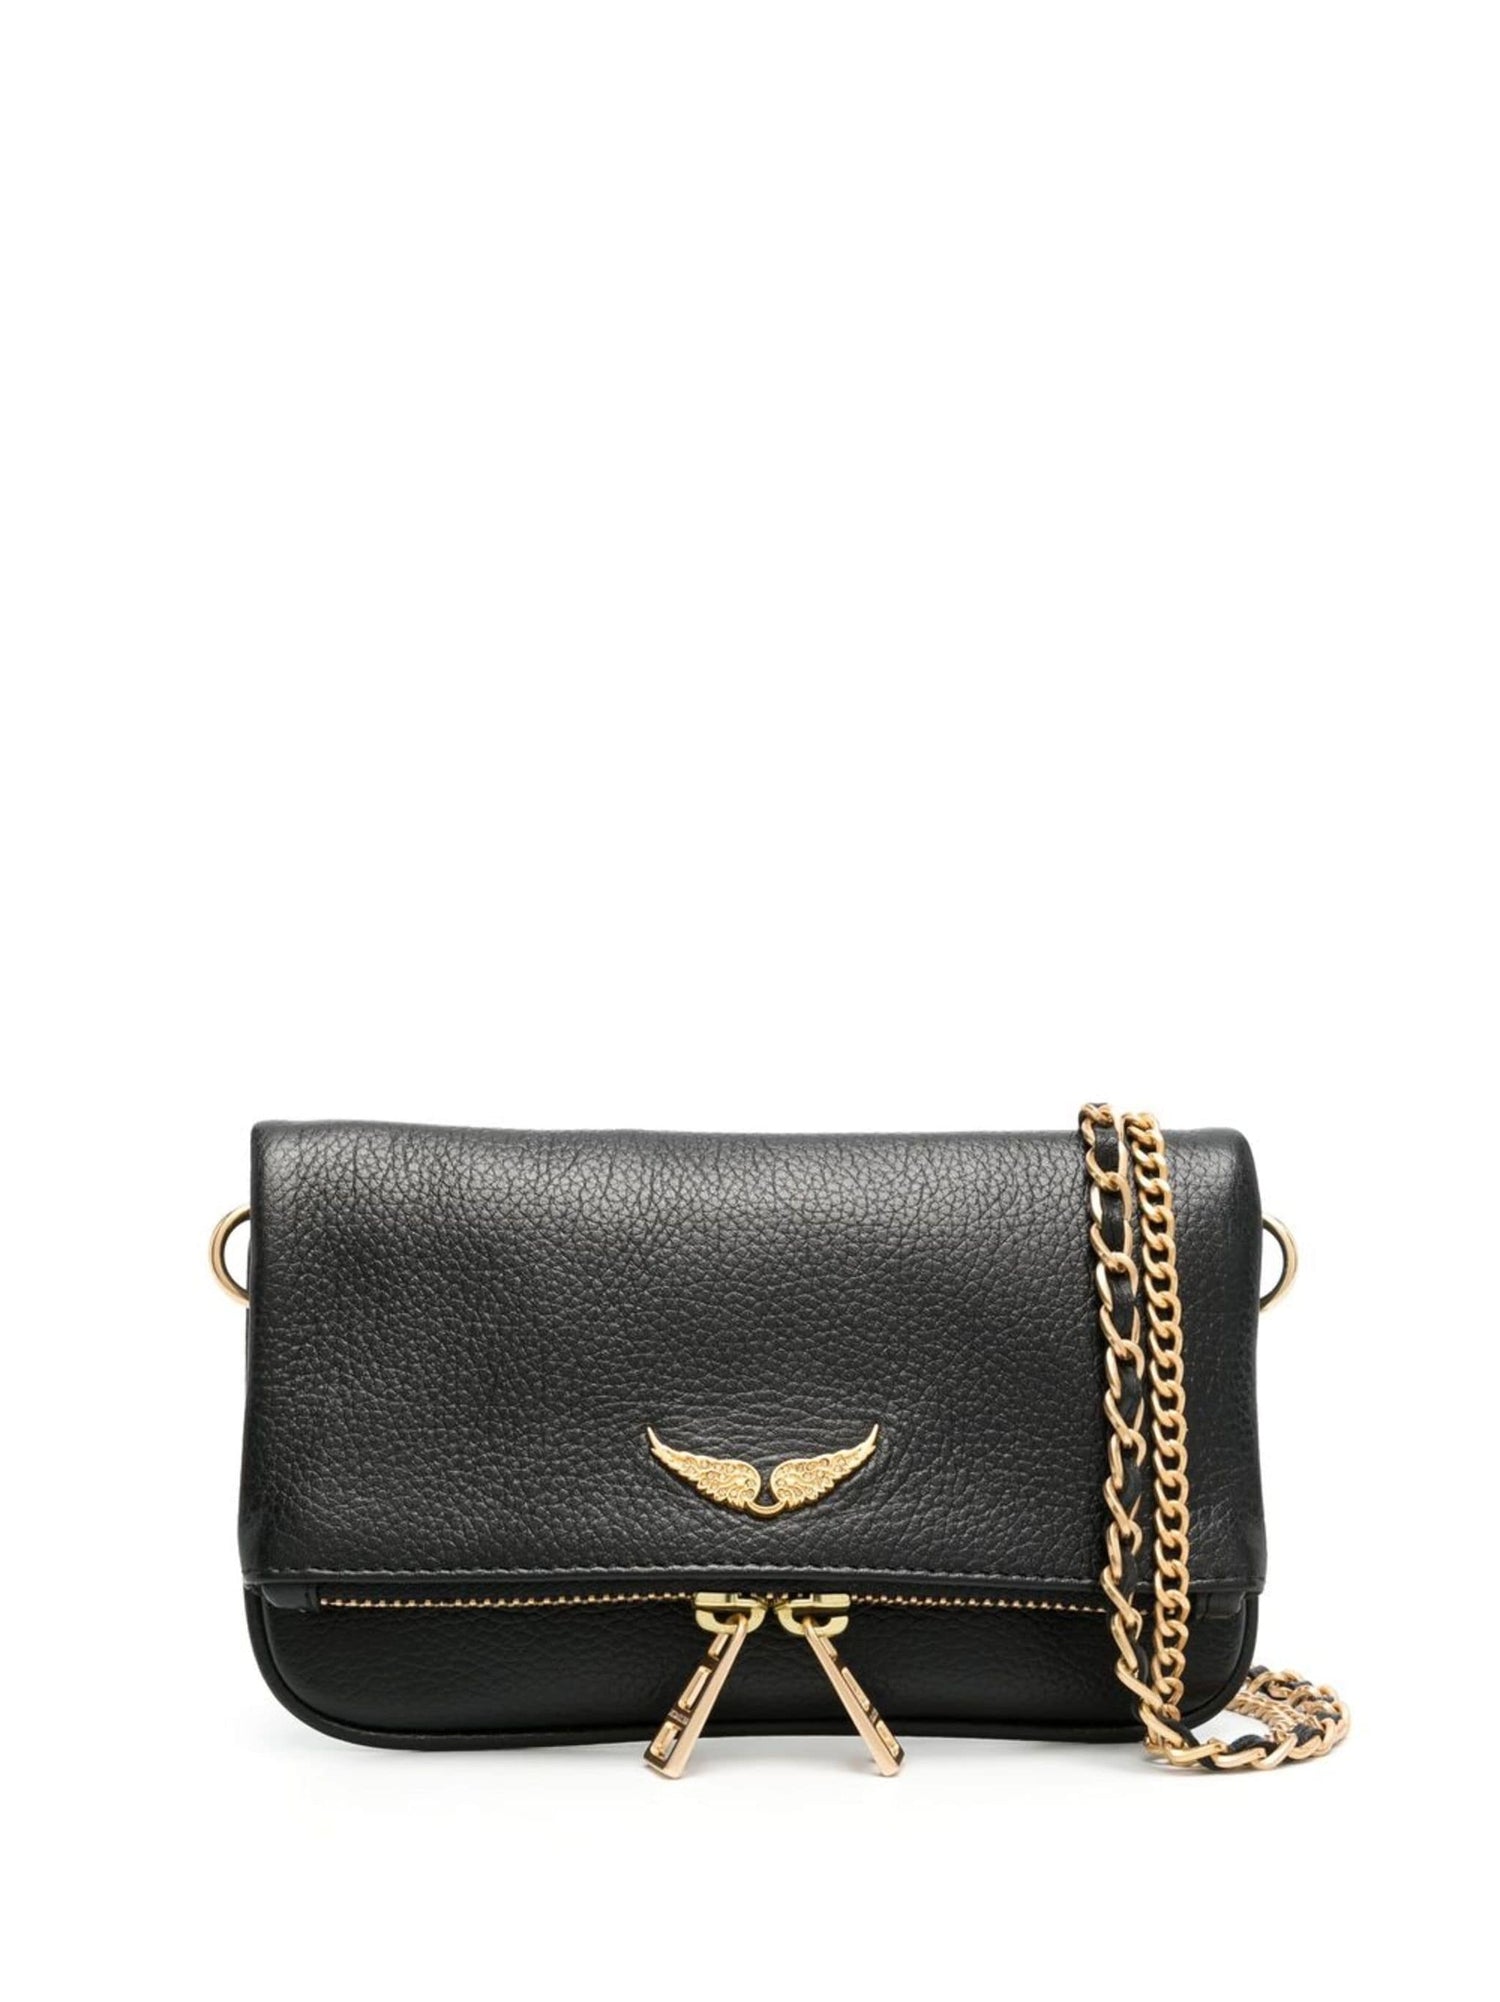 ROCK NANO GRAINED LEATHER handbag, black/gold